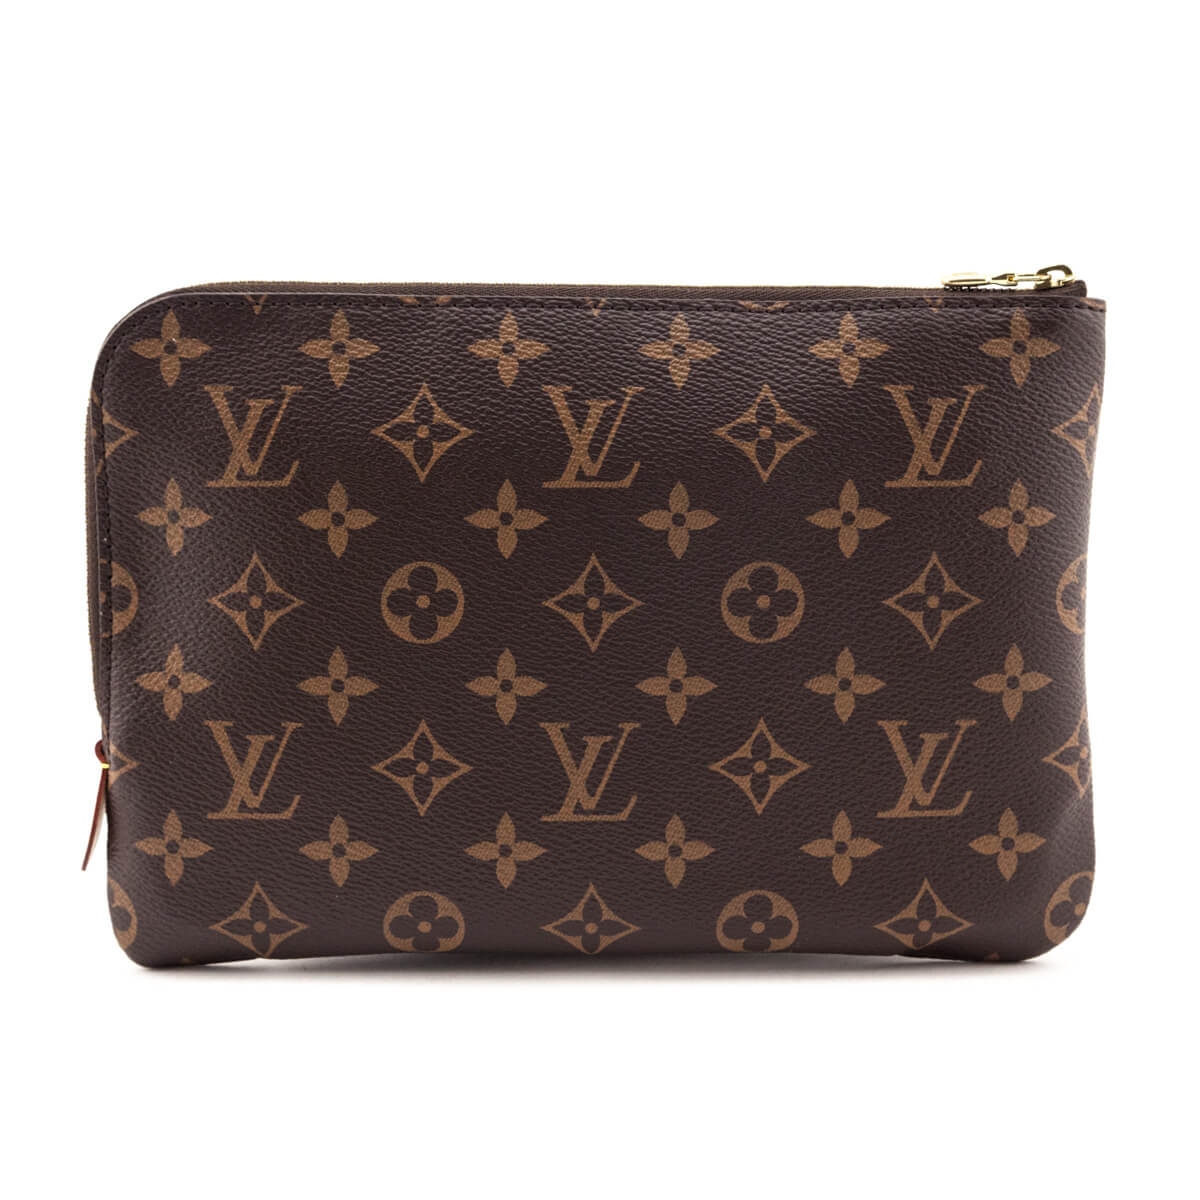 Louis Vuitton Monogram Etui Voyage PM - Love that Bag etc - Preowned Authentic Designer Handbags & Preloved Fashions